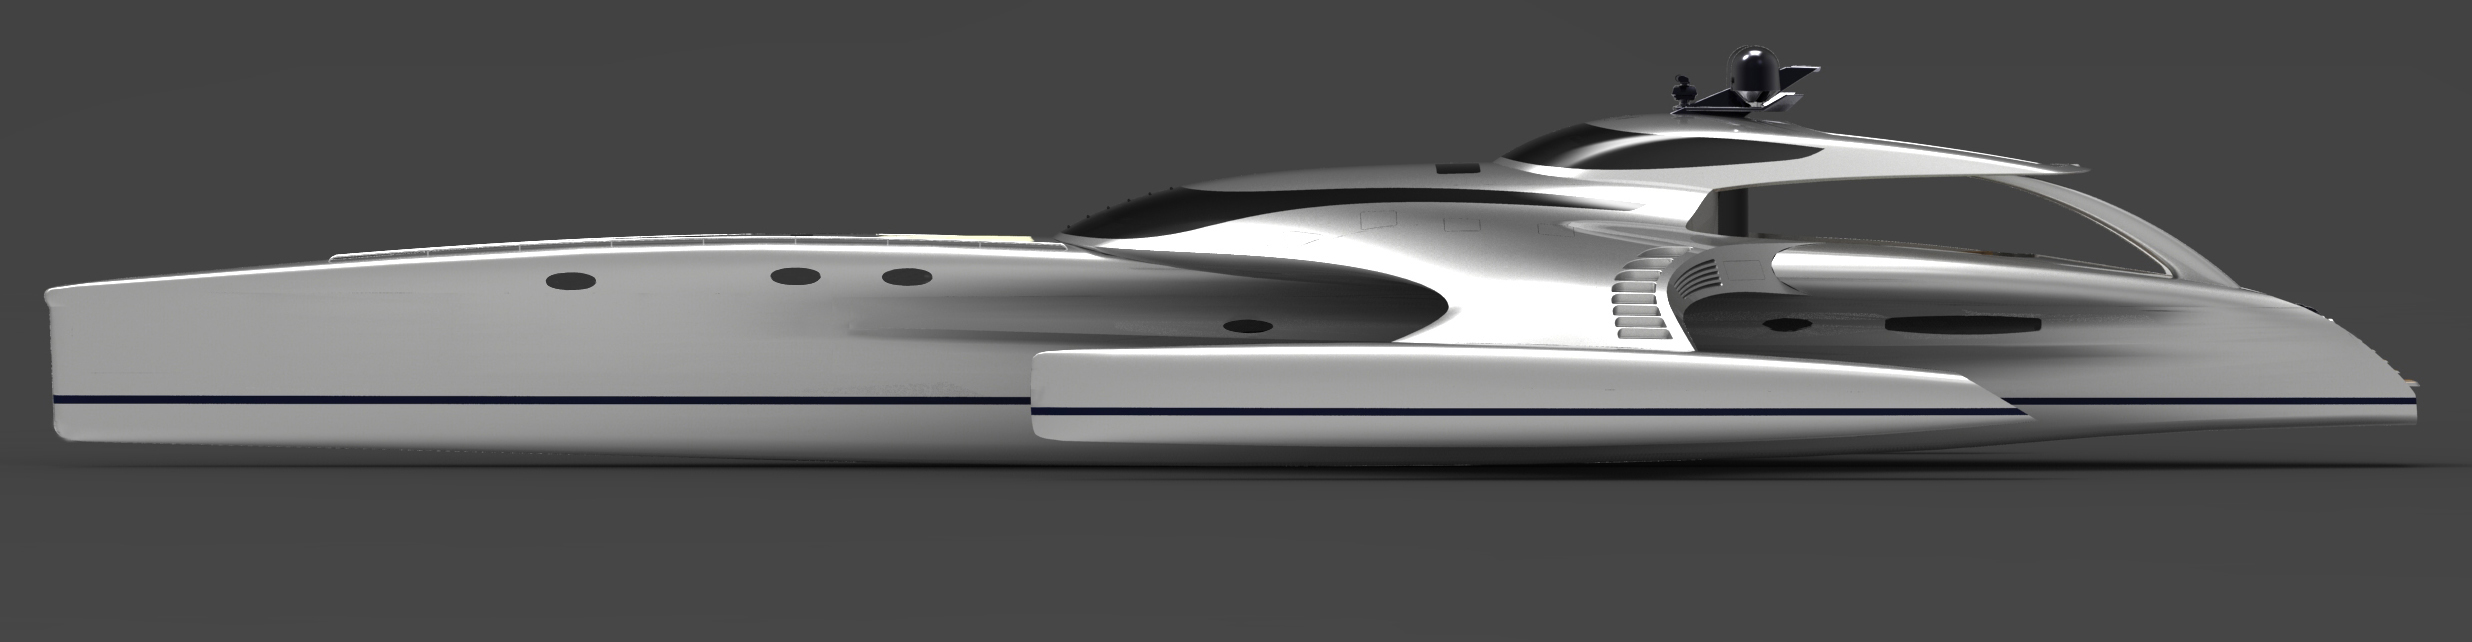 trimaran boat design rc airplane plans aluminum fishing boat plans 